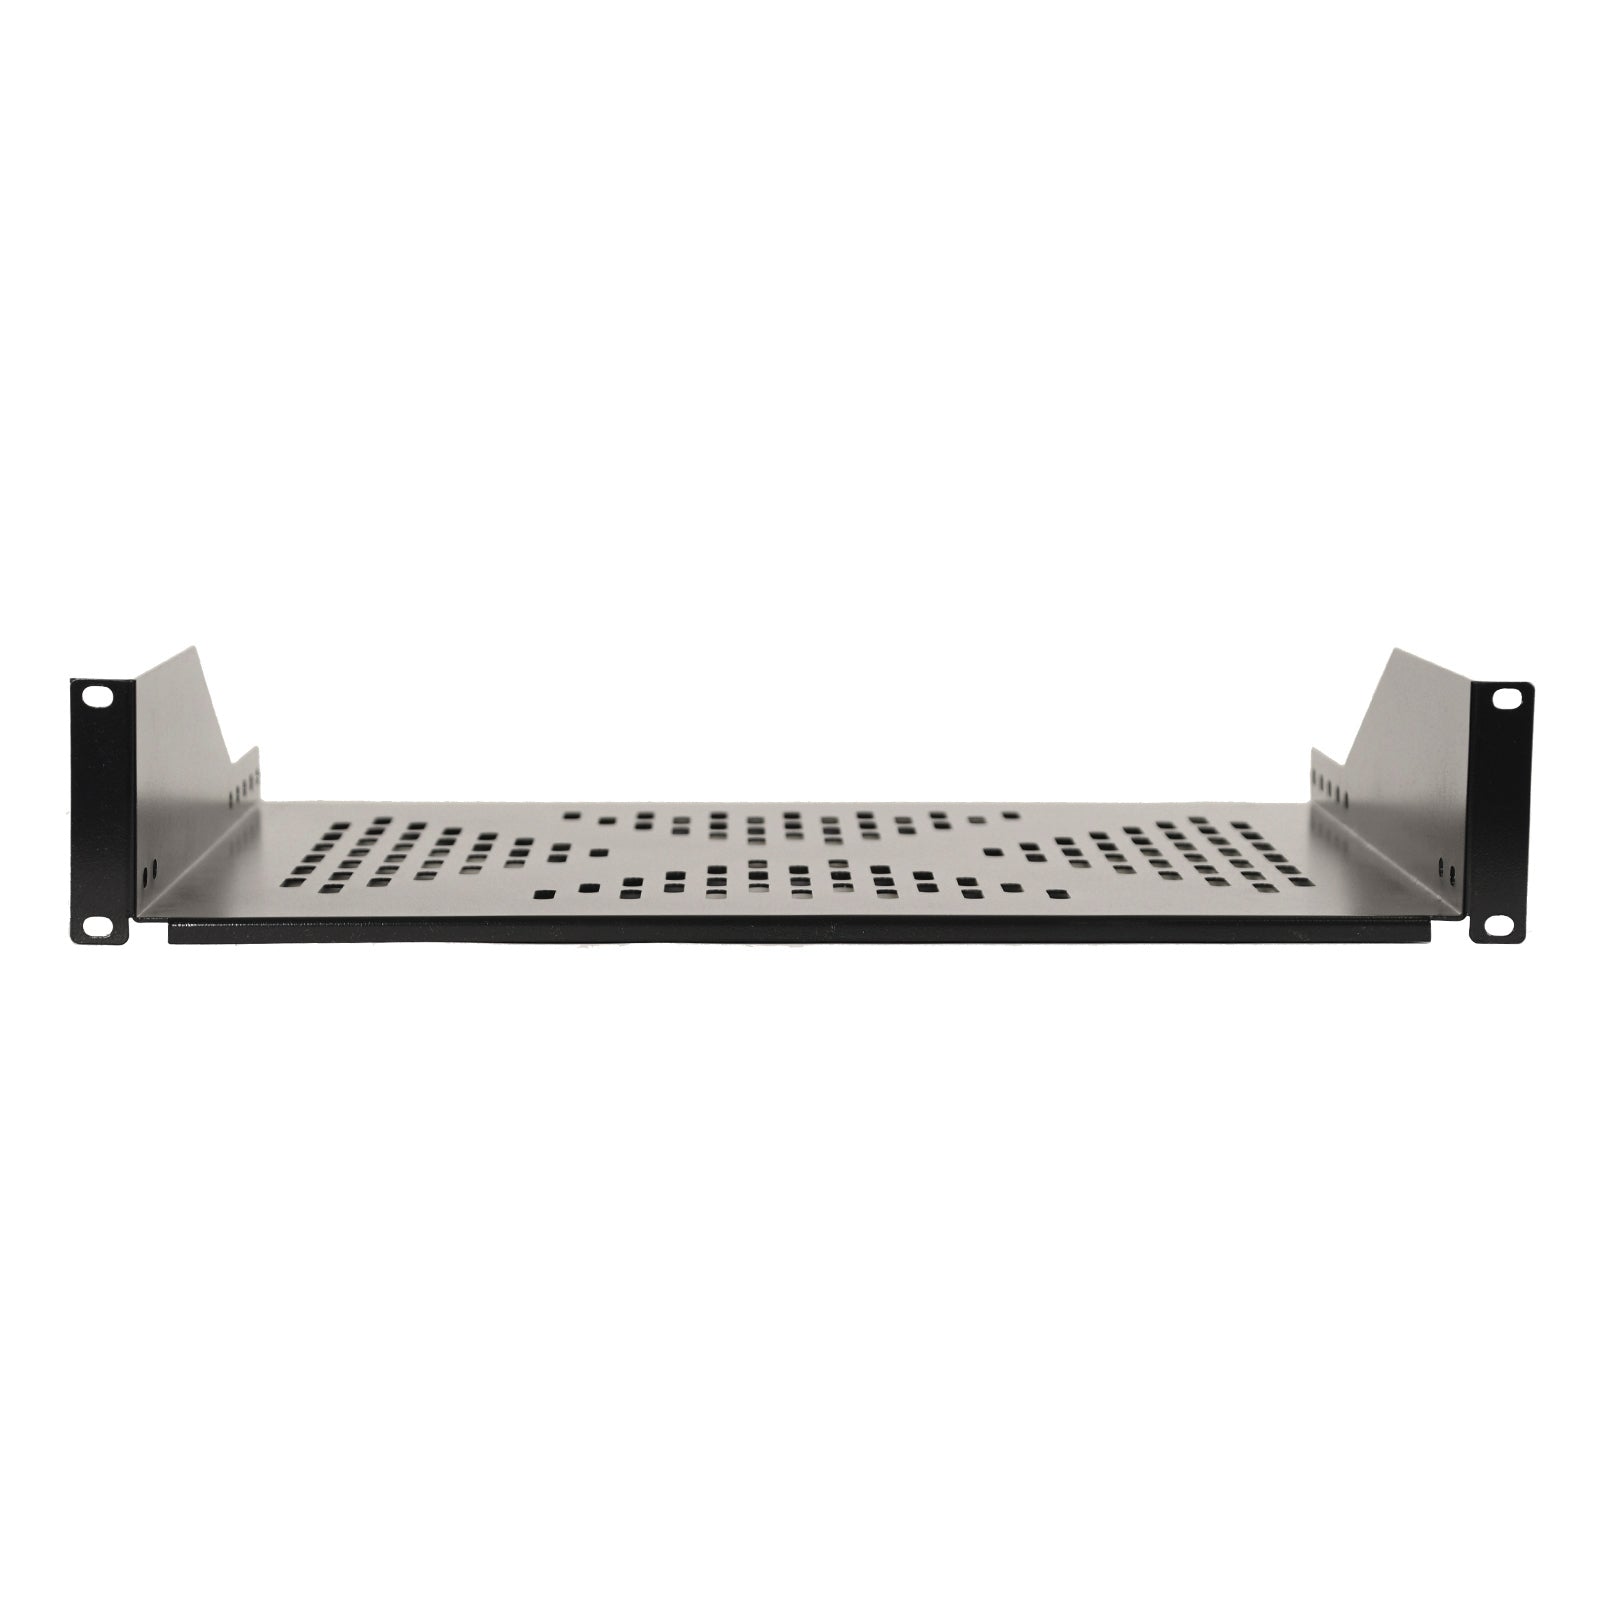 Aeons Premium 2U Server Rack Mount Vented Cantilever Shelf, 16-inch Depth, Heavy Duty